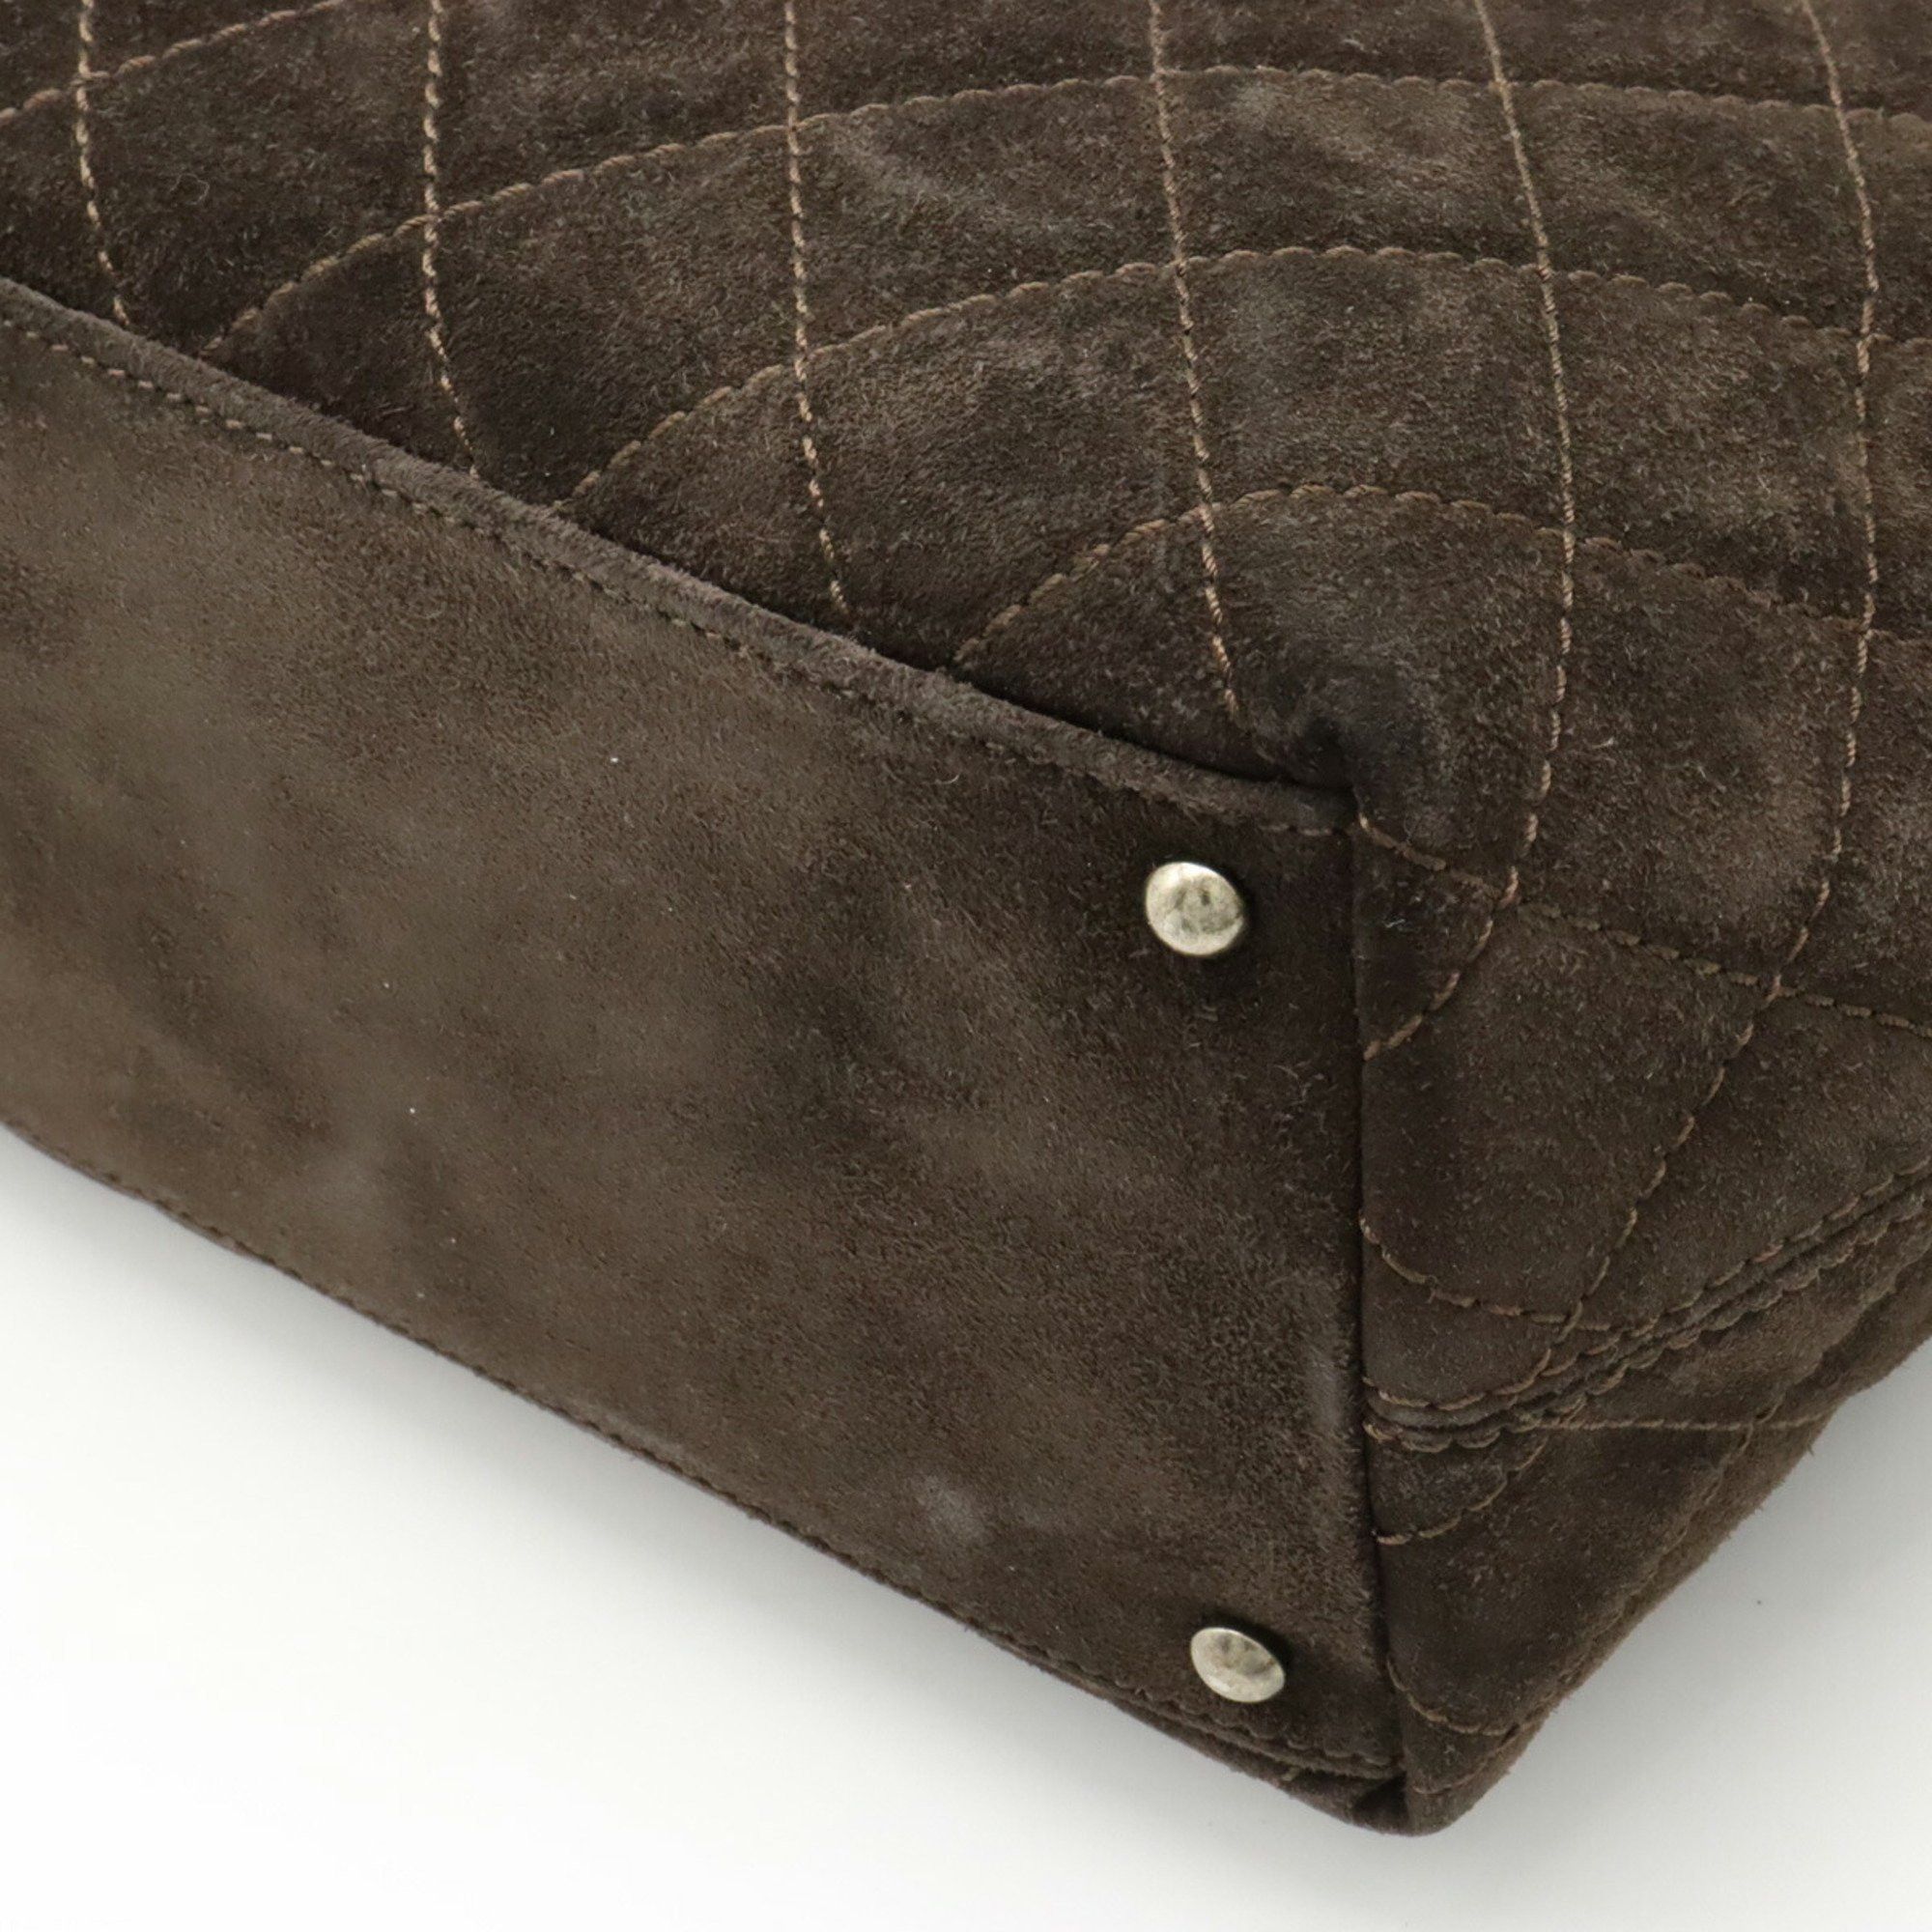 Chanel CHANEL Wild Stitch Matelasse Tote Bag Handbag Shoulder Suede Leather Dark Brown Size ONE SIZE - 3 Thumbnail